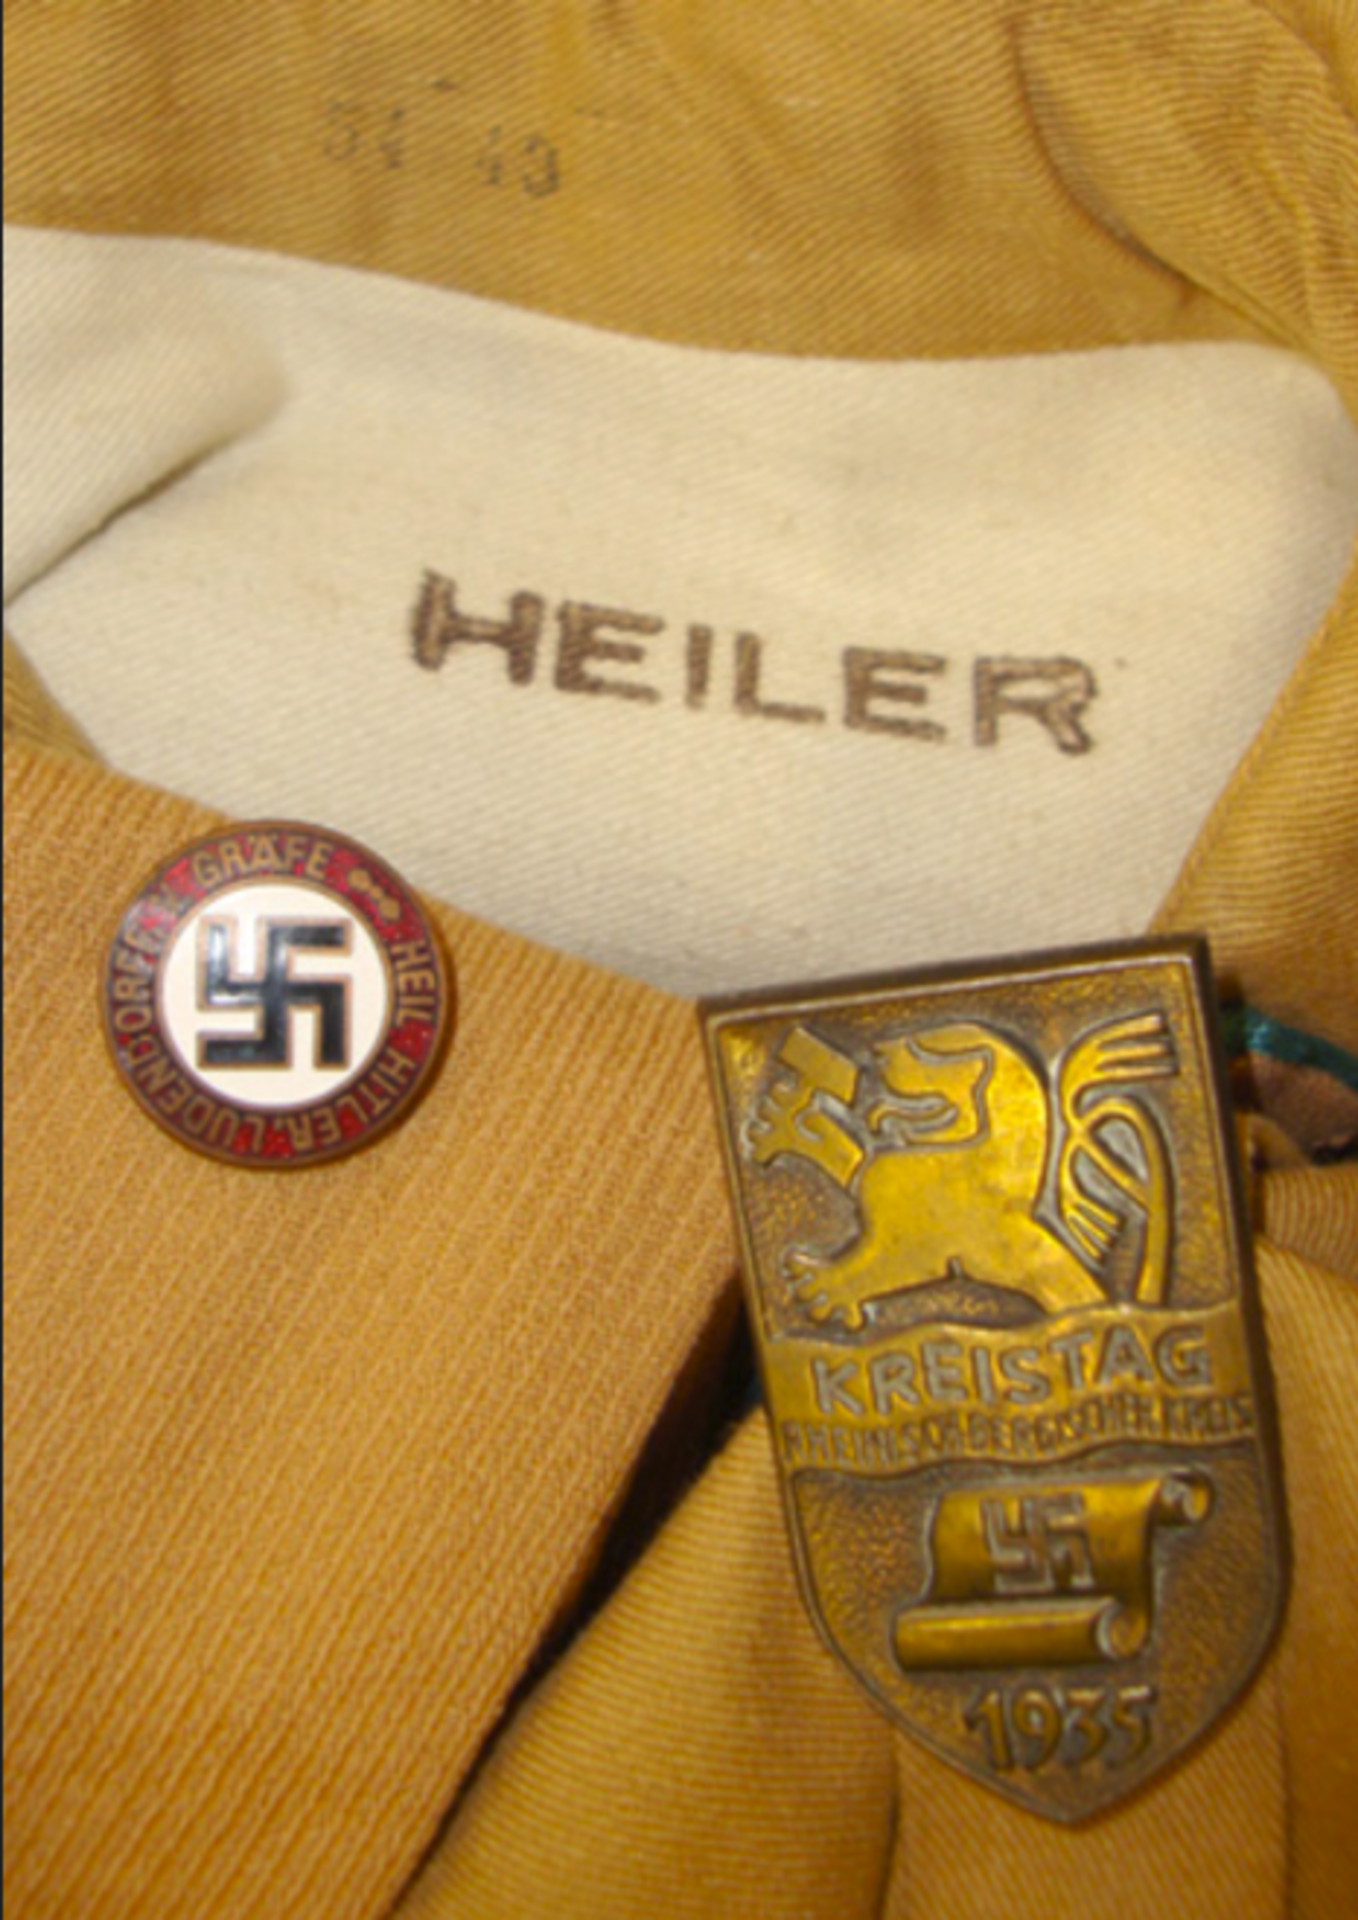 Nazi 1934-1939 NSDAP Zellenleiter (Cell Leader's) Shirt/ Short Jacket With Collar Insignia, Metal - Image 2 of 3